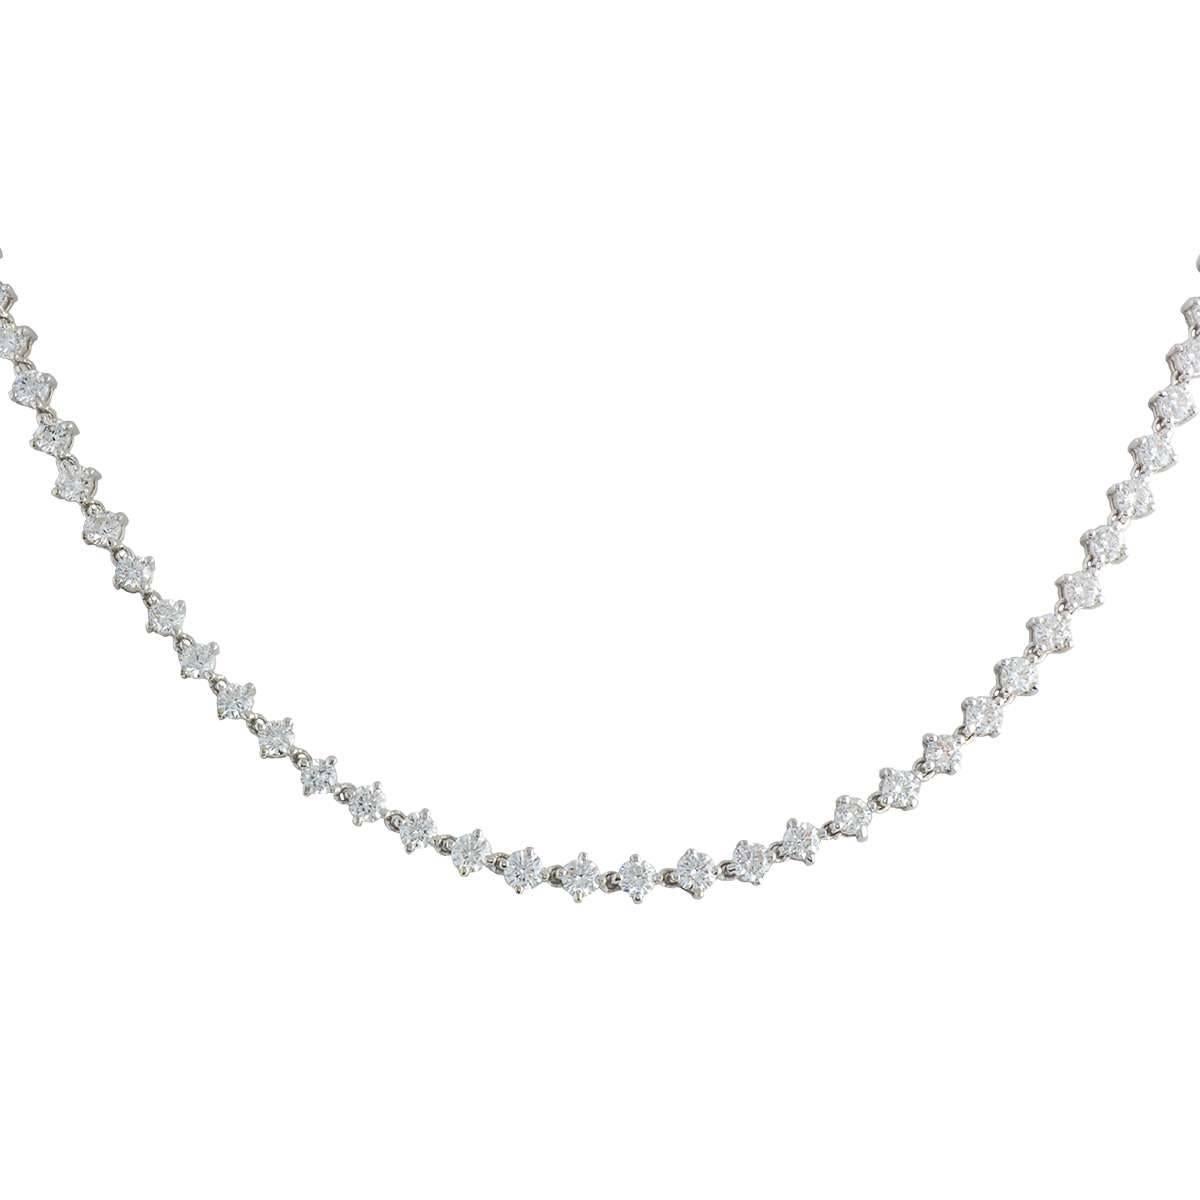 Full Diamond White Gold Necklace 7.63 Carat